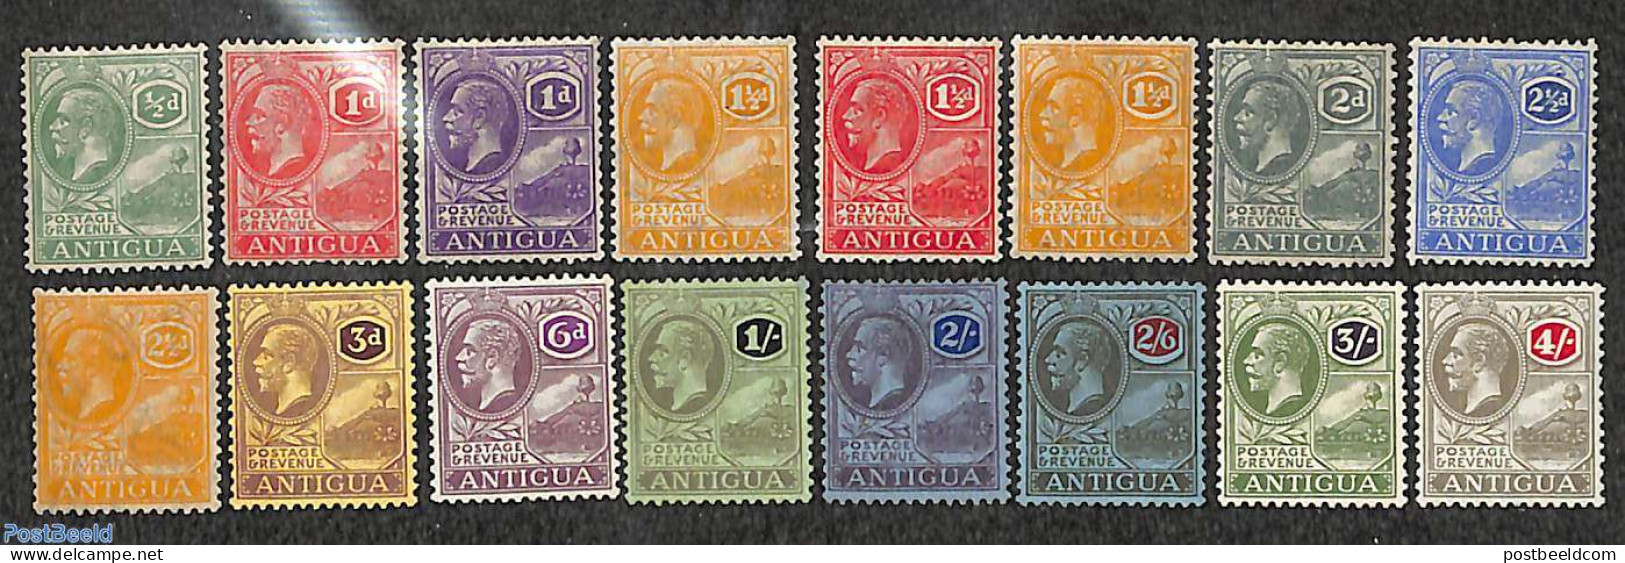 Antigua & Barbuda 1921 Definitives 16v, Unused (hinged) - Antigua And Barbuda (1981-...)